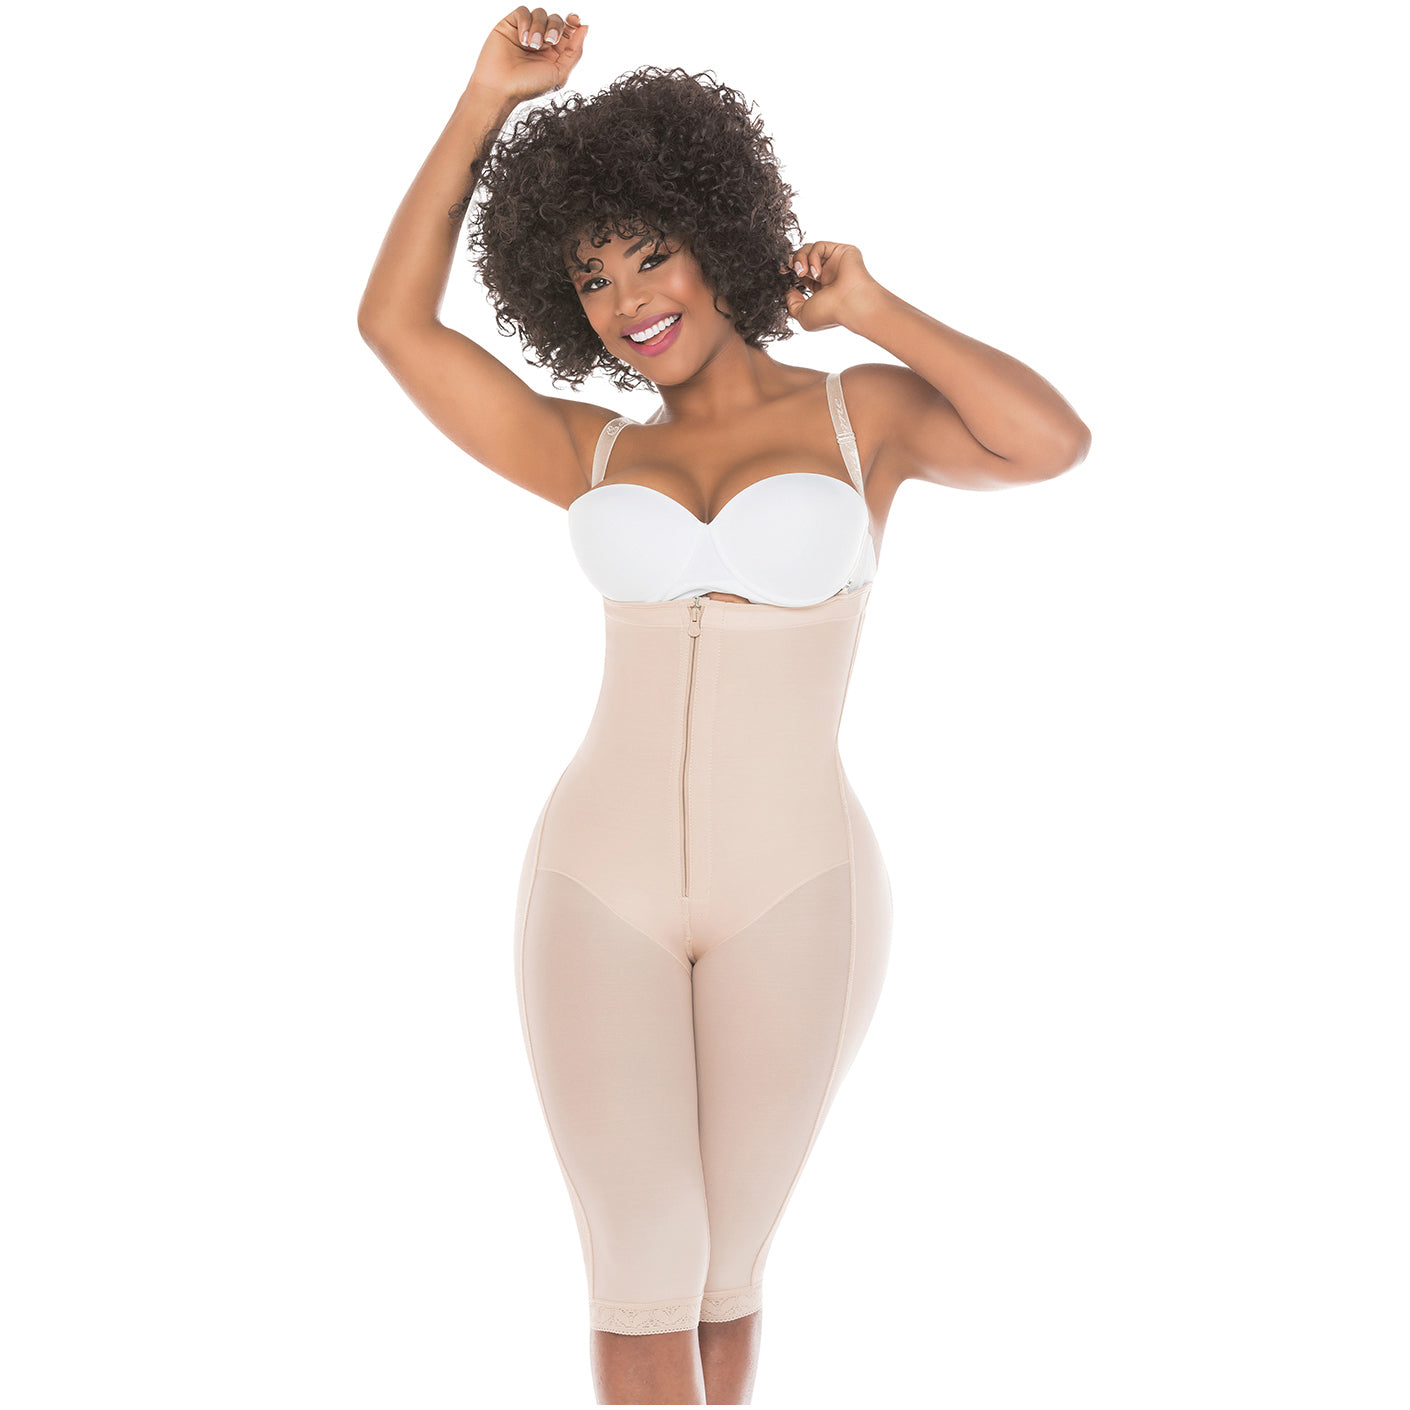 Salome 0216 Fajas Colombianas Postparto Reductoras y Moldeadoras Levanta  Cola Full Body Shaper Postpartum Girdle Shapewear for Women Black M